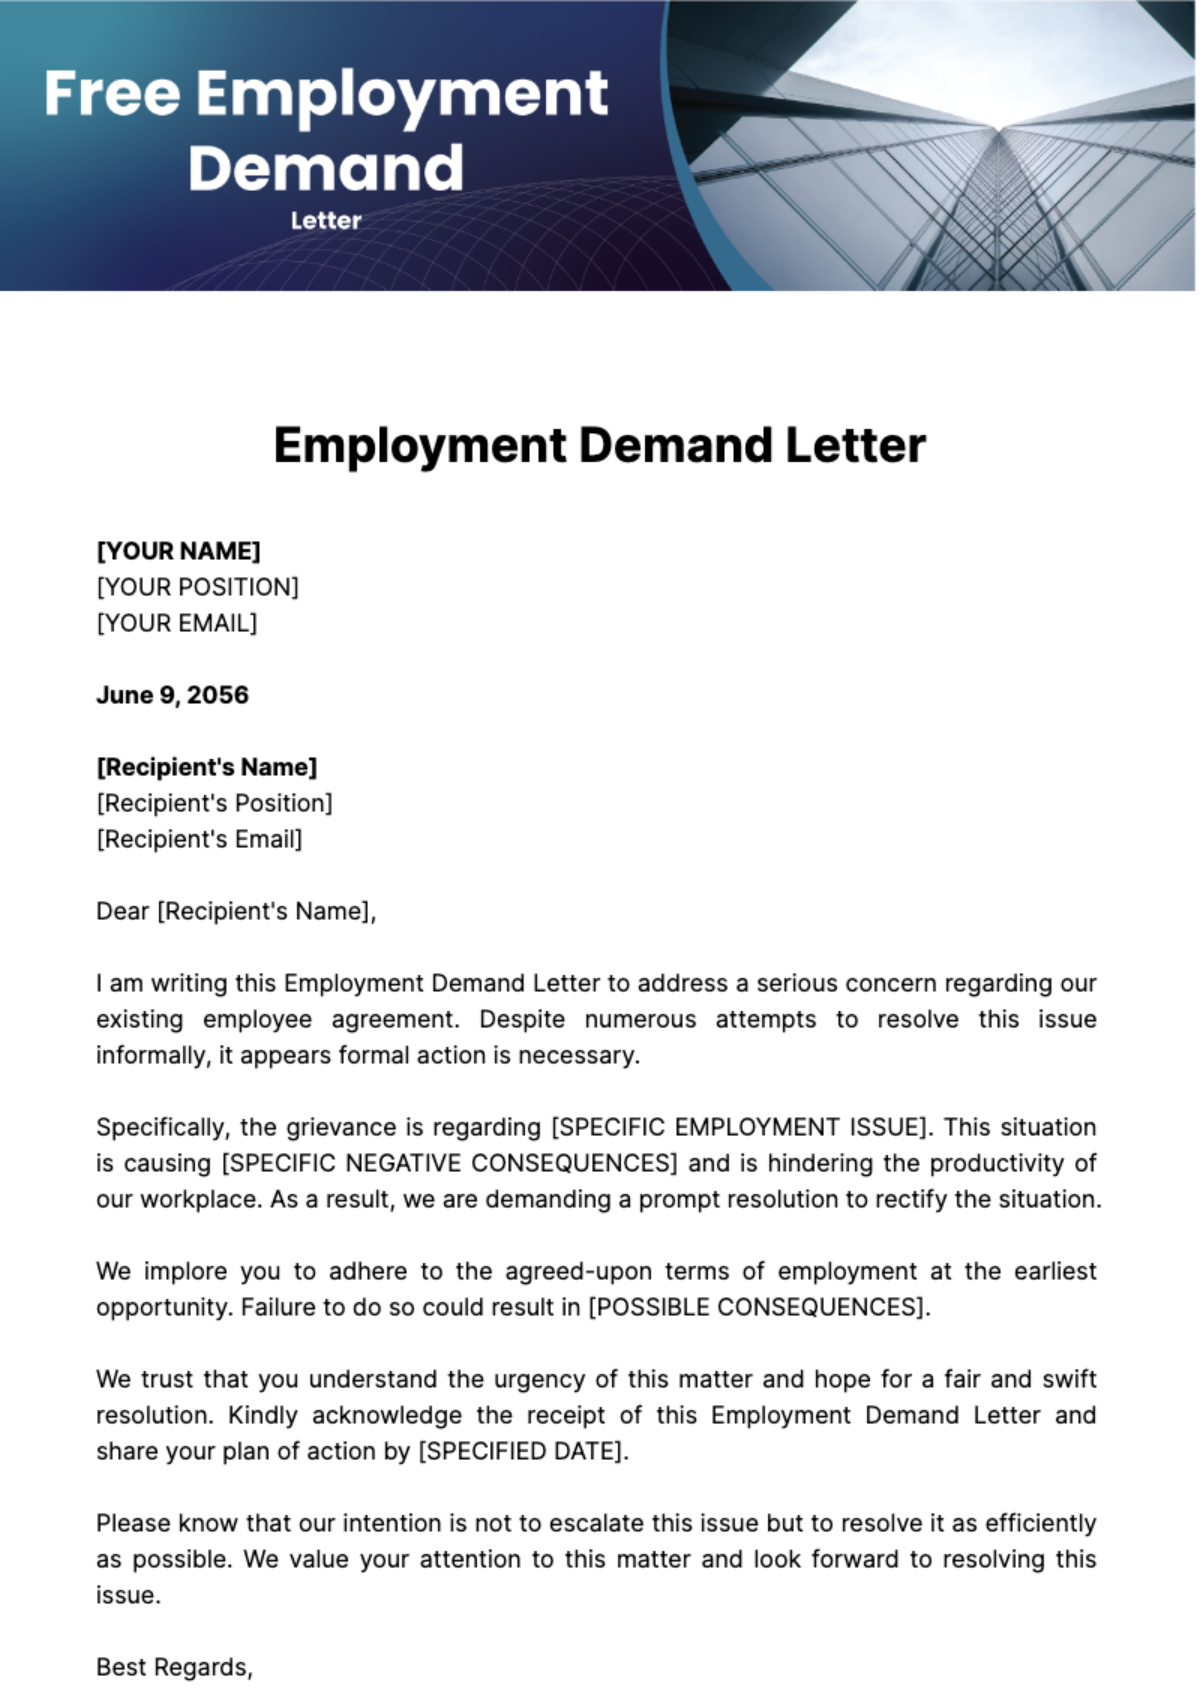 Free Employment Demand Letter Template